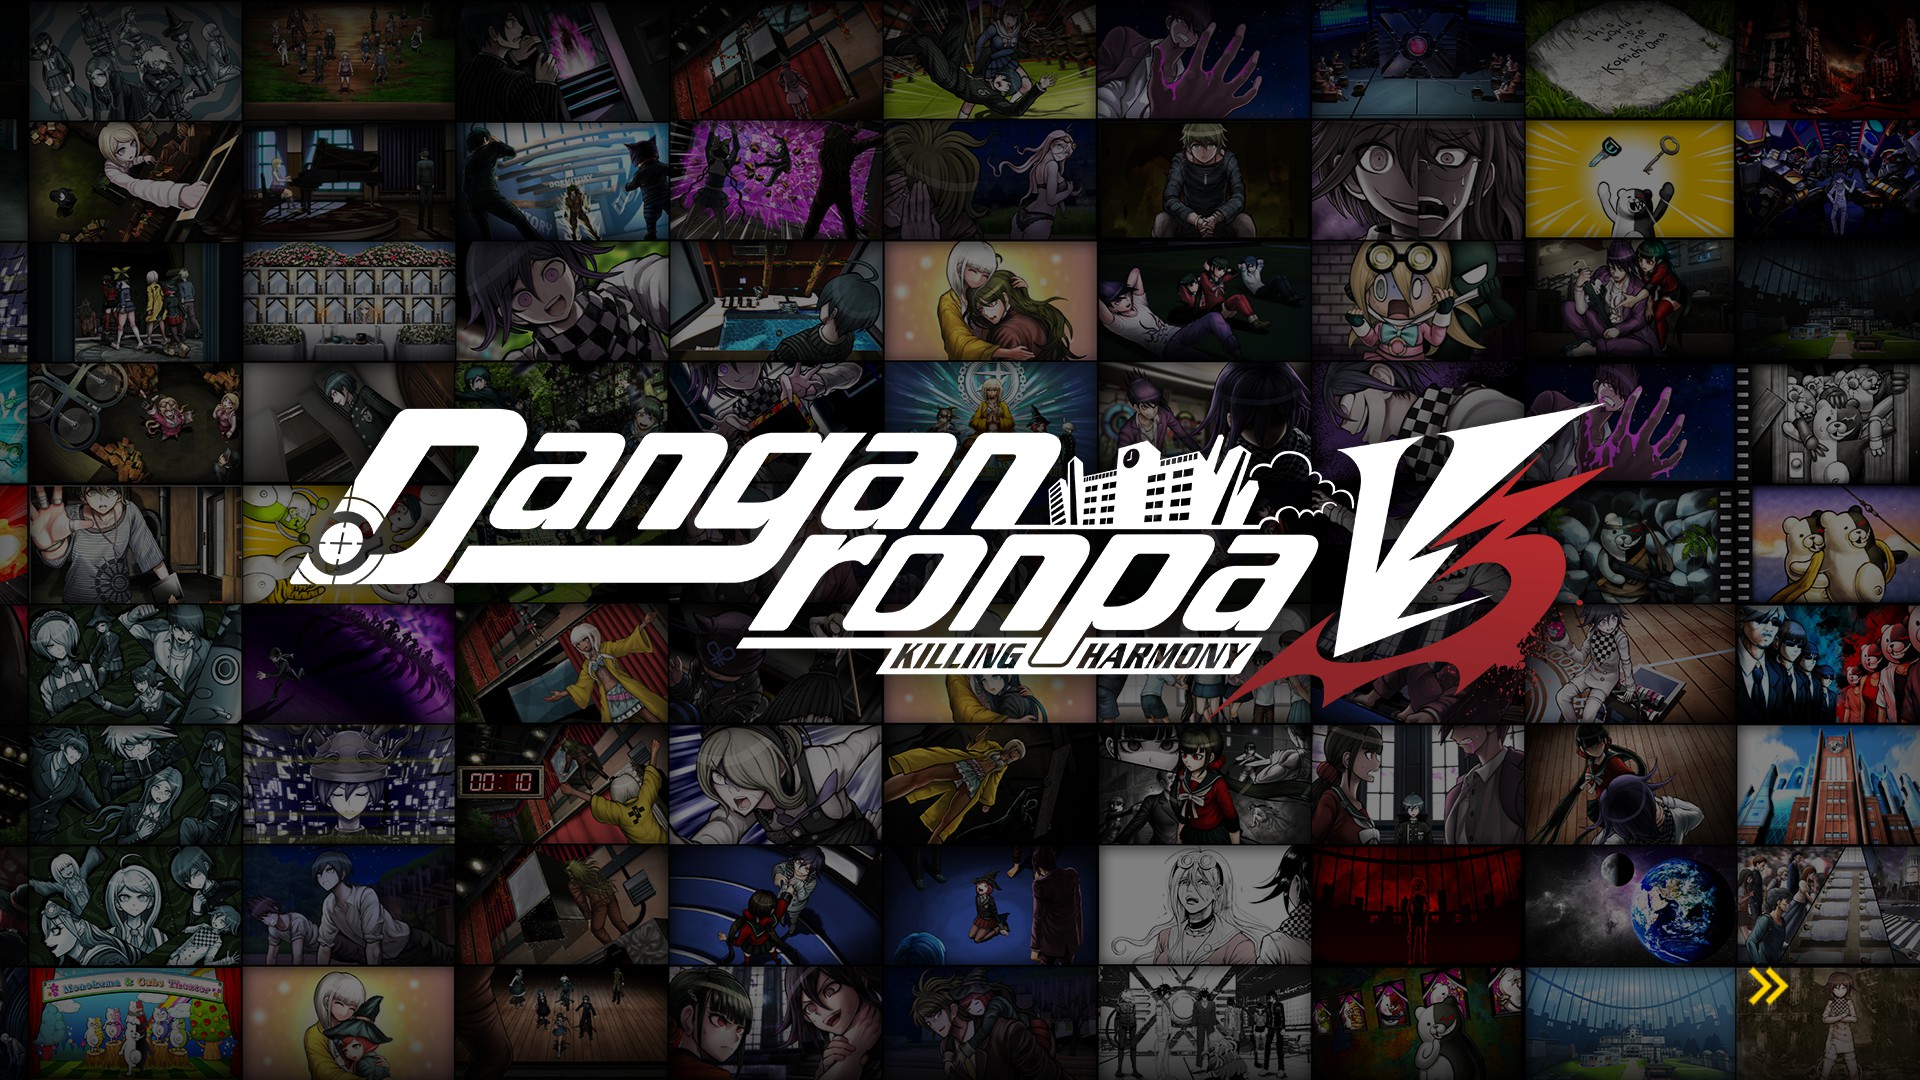 Danganronpa V3’S Ending Makes A Polarizing Case For Letting The Series Go